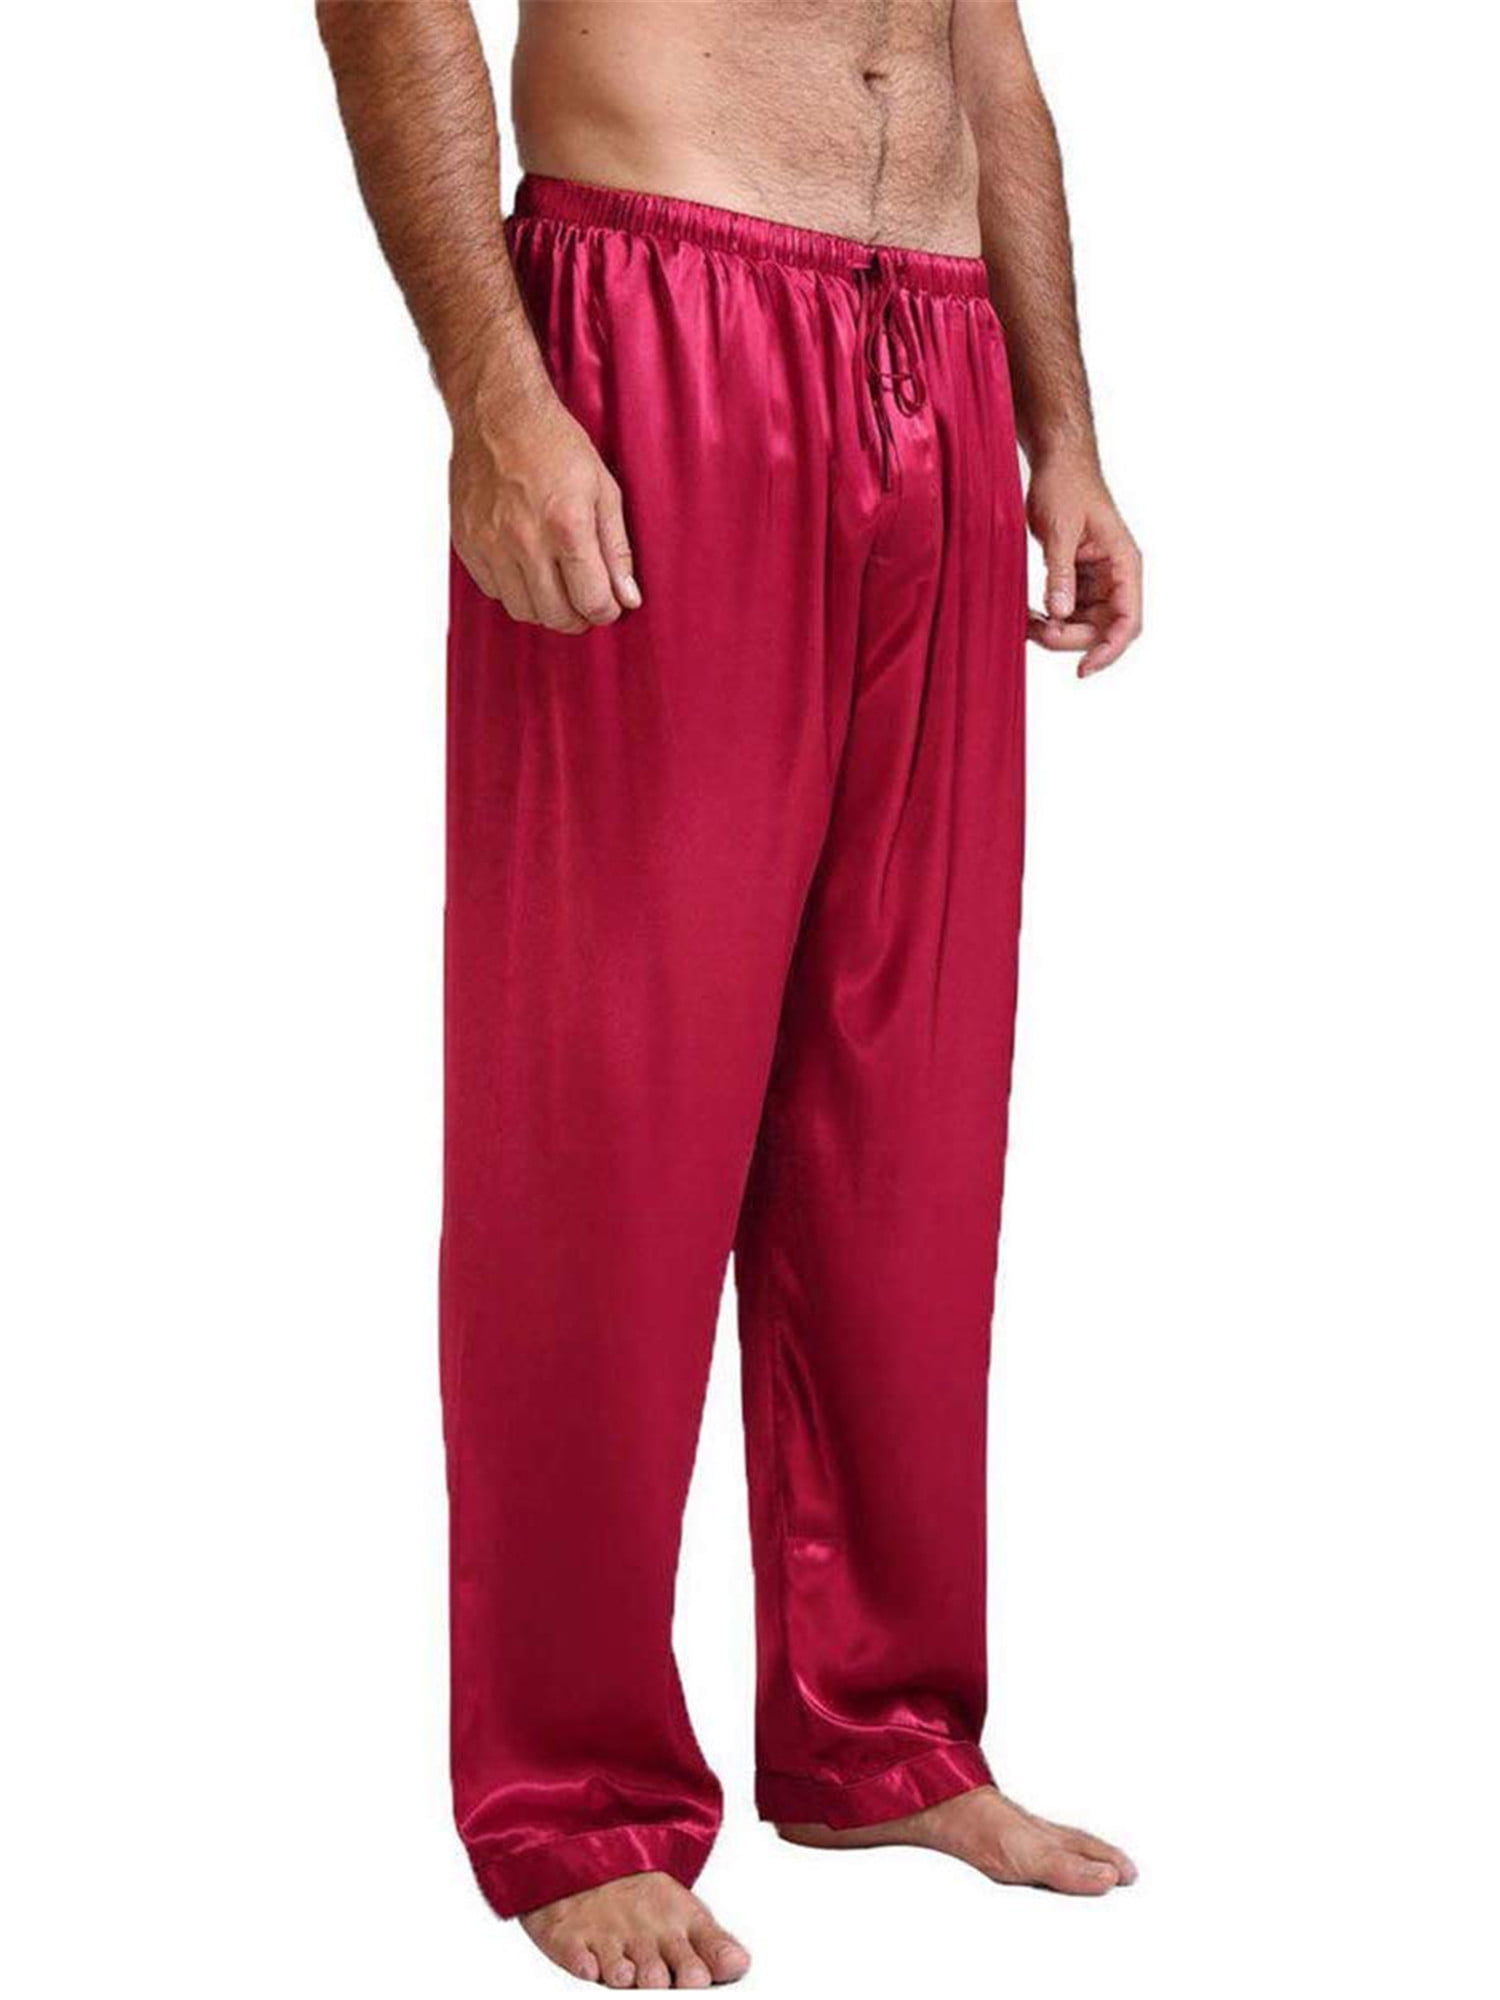 Mens Lounge Pants Pyjama Pjs Joggers Style Bottom Fleece Cotton Rich Plain Soft Warm Nightwear S M L XL Black Navy 